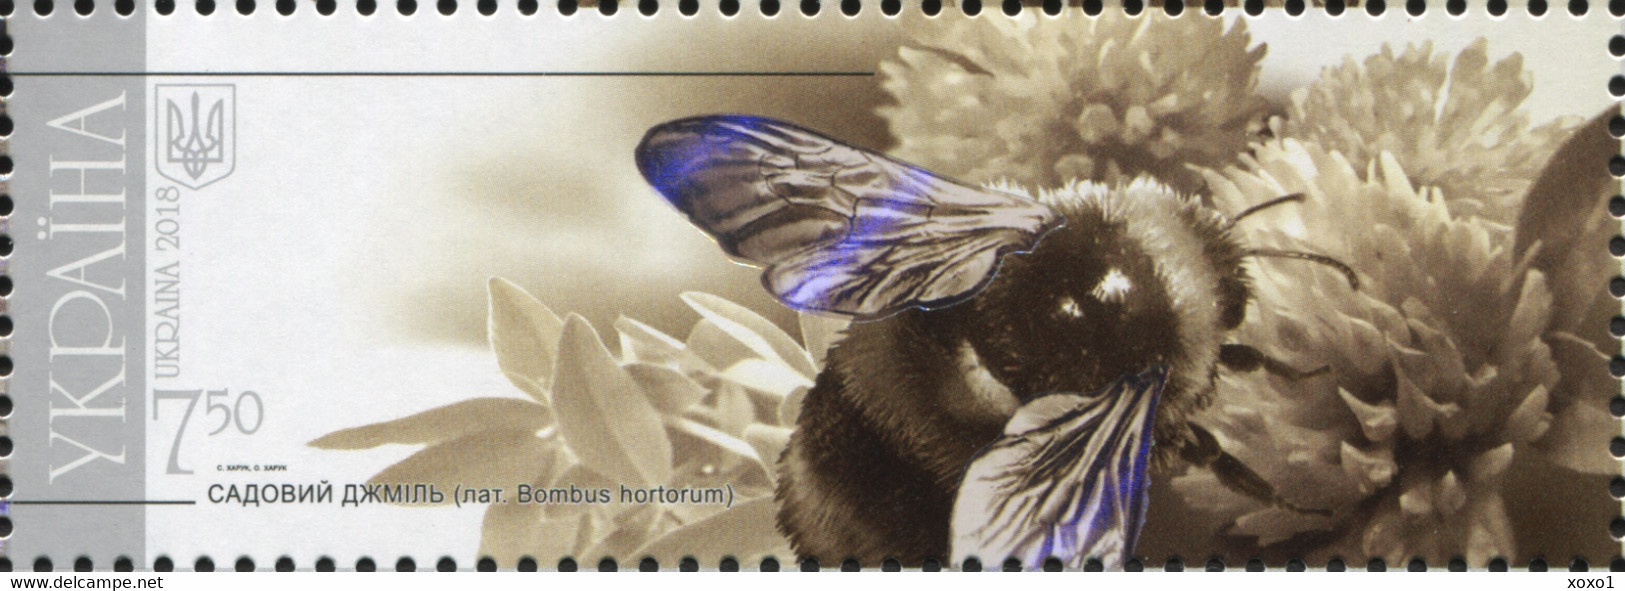 Ukraine 2018 MiNr. 1693 - 1699 (Block 149) Insects Butterflies Dragonflies Bees Cricket m\sh  MNH ** 12,50 €